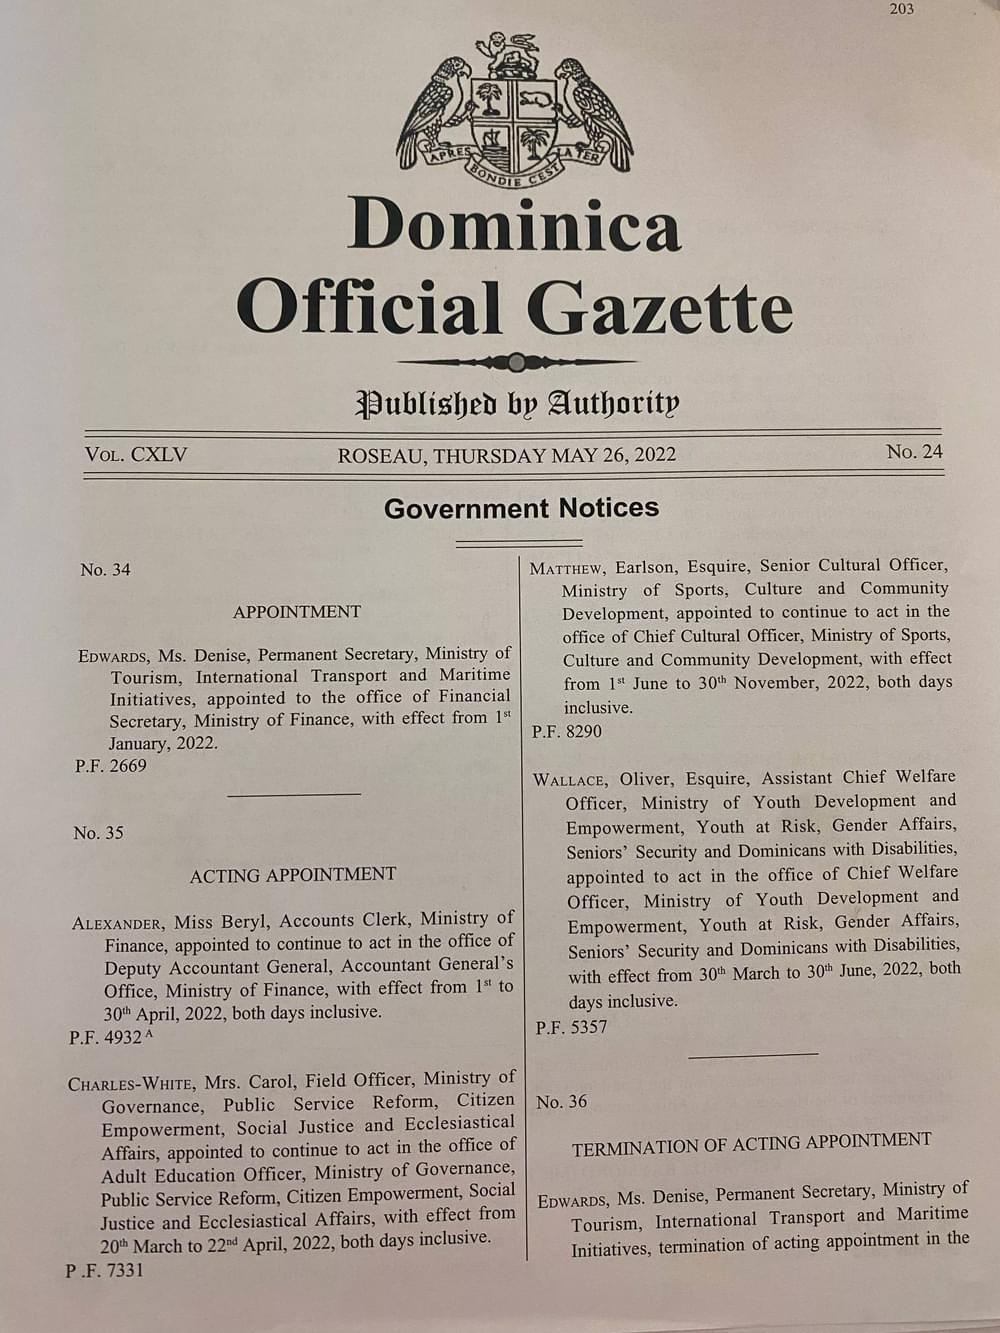 dominica-passports-of-the-caribbean/dominica-official-gazette-zack-kopplin.jpg